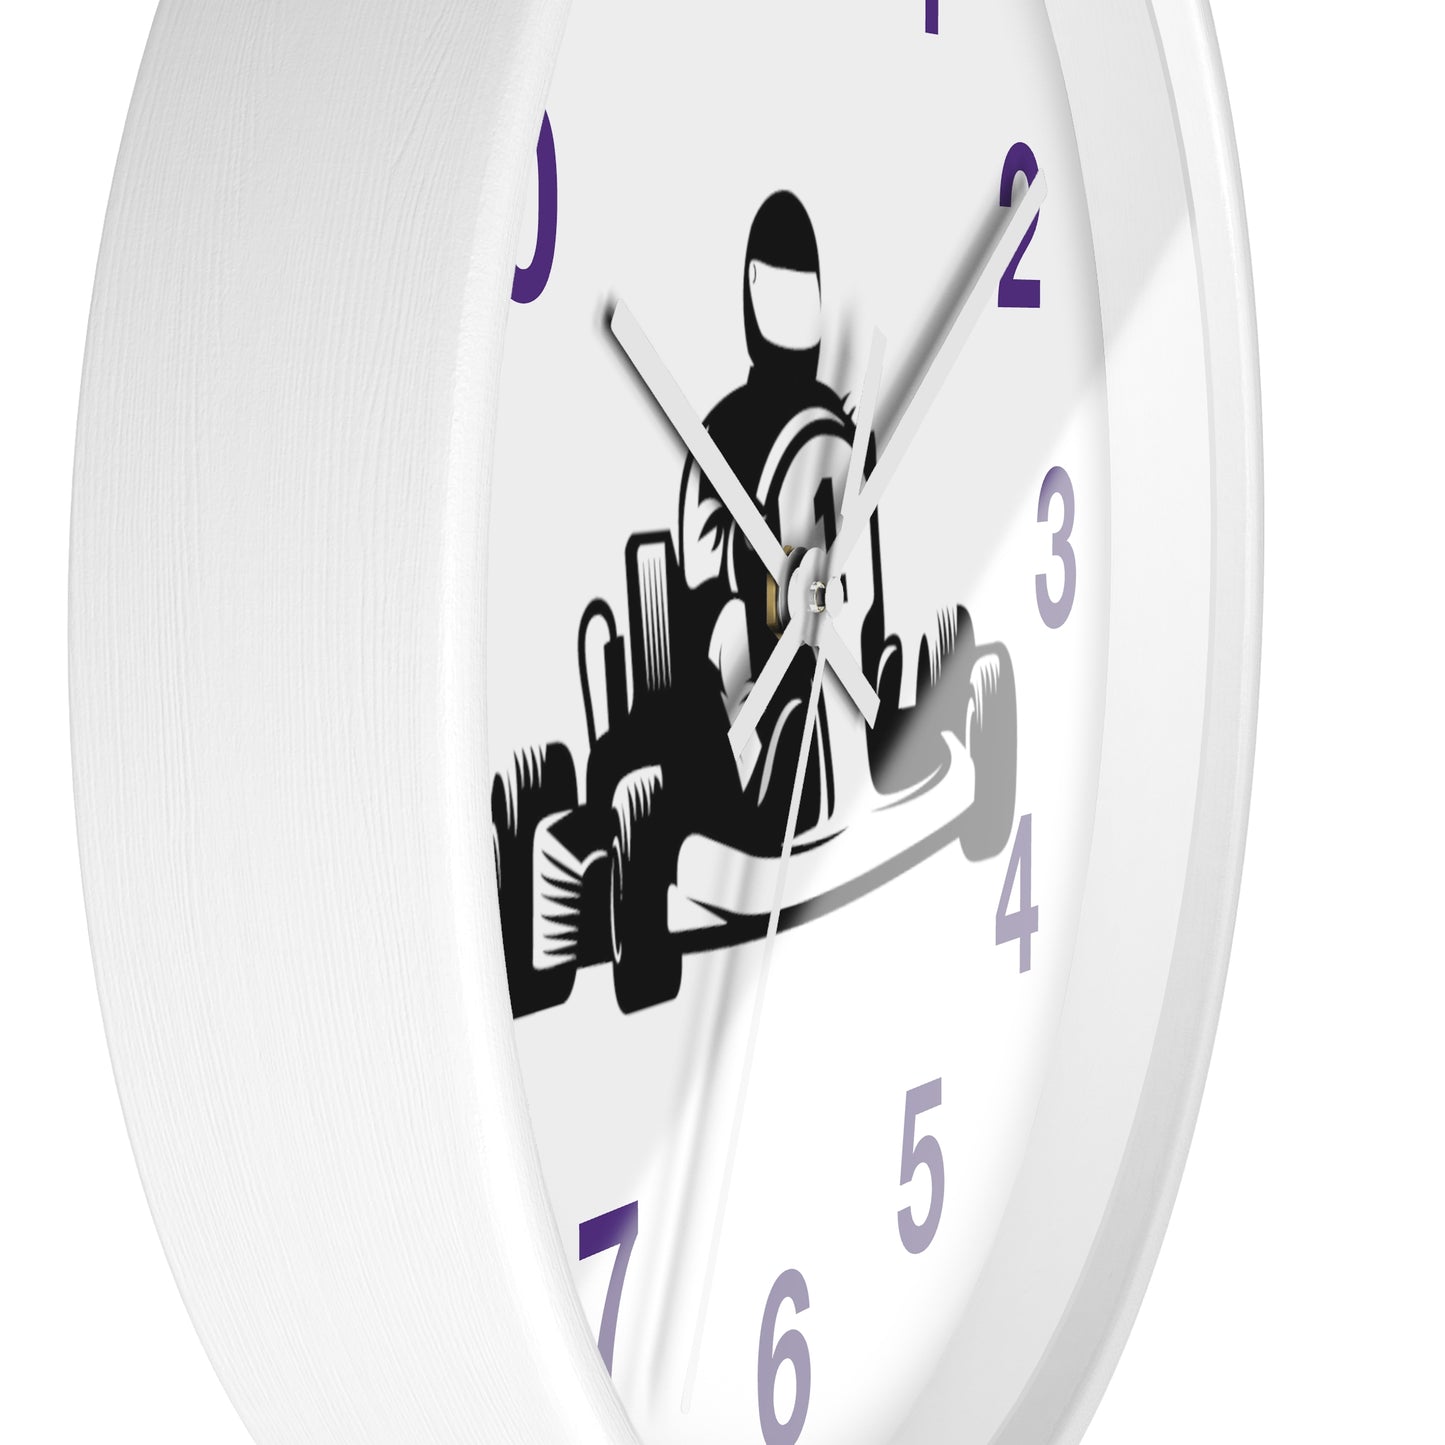 Wall clock: Racing Purple